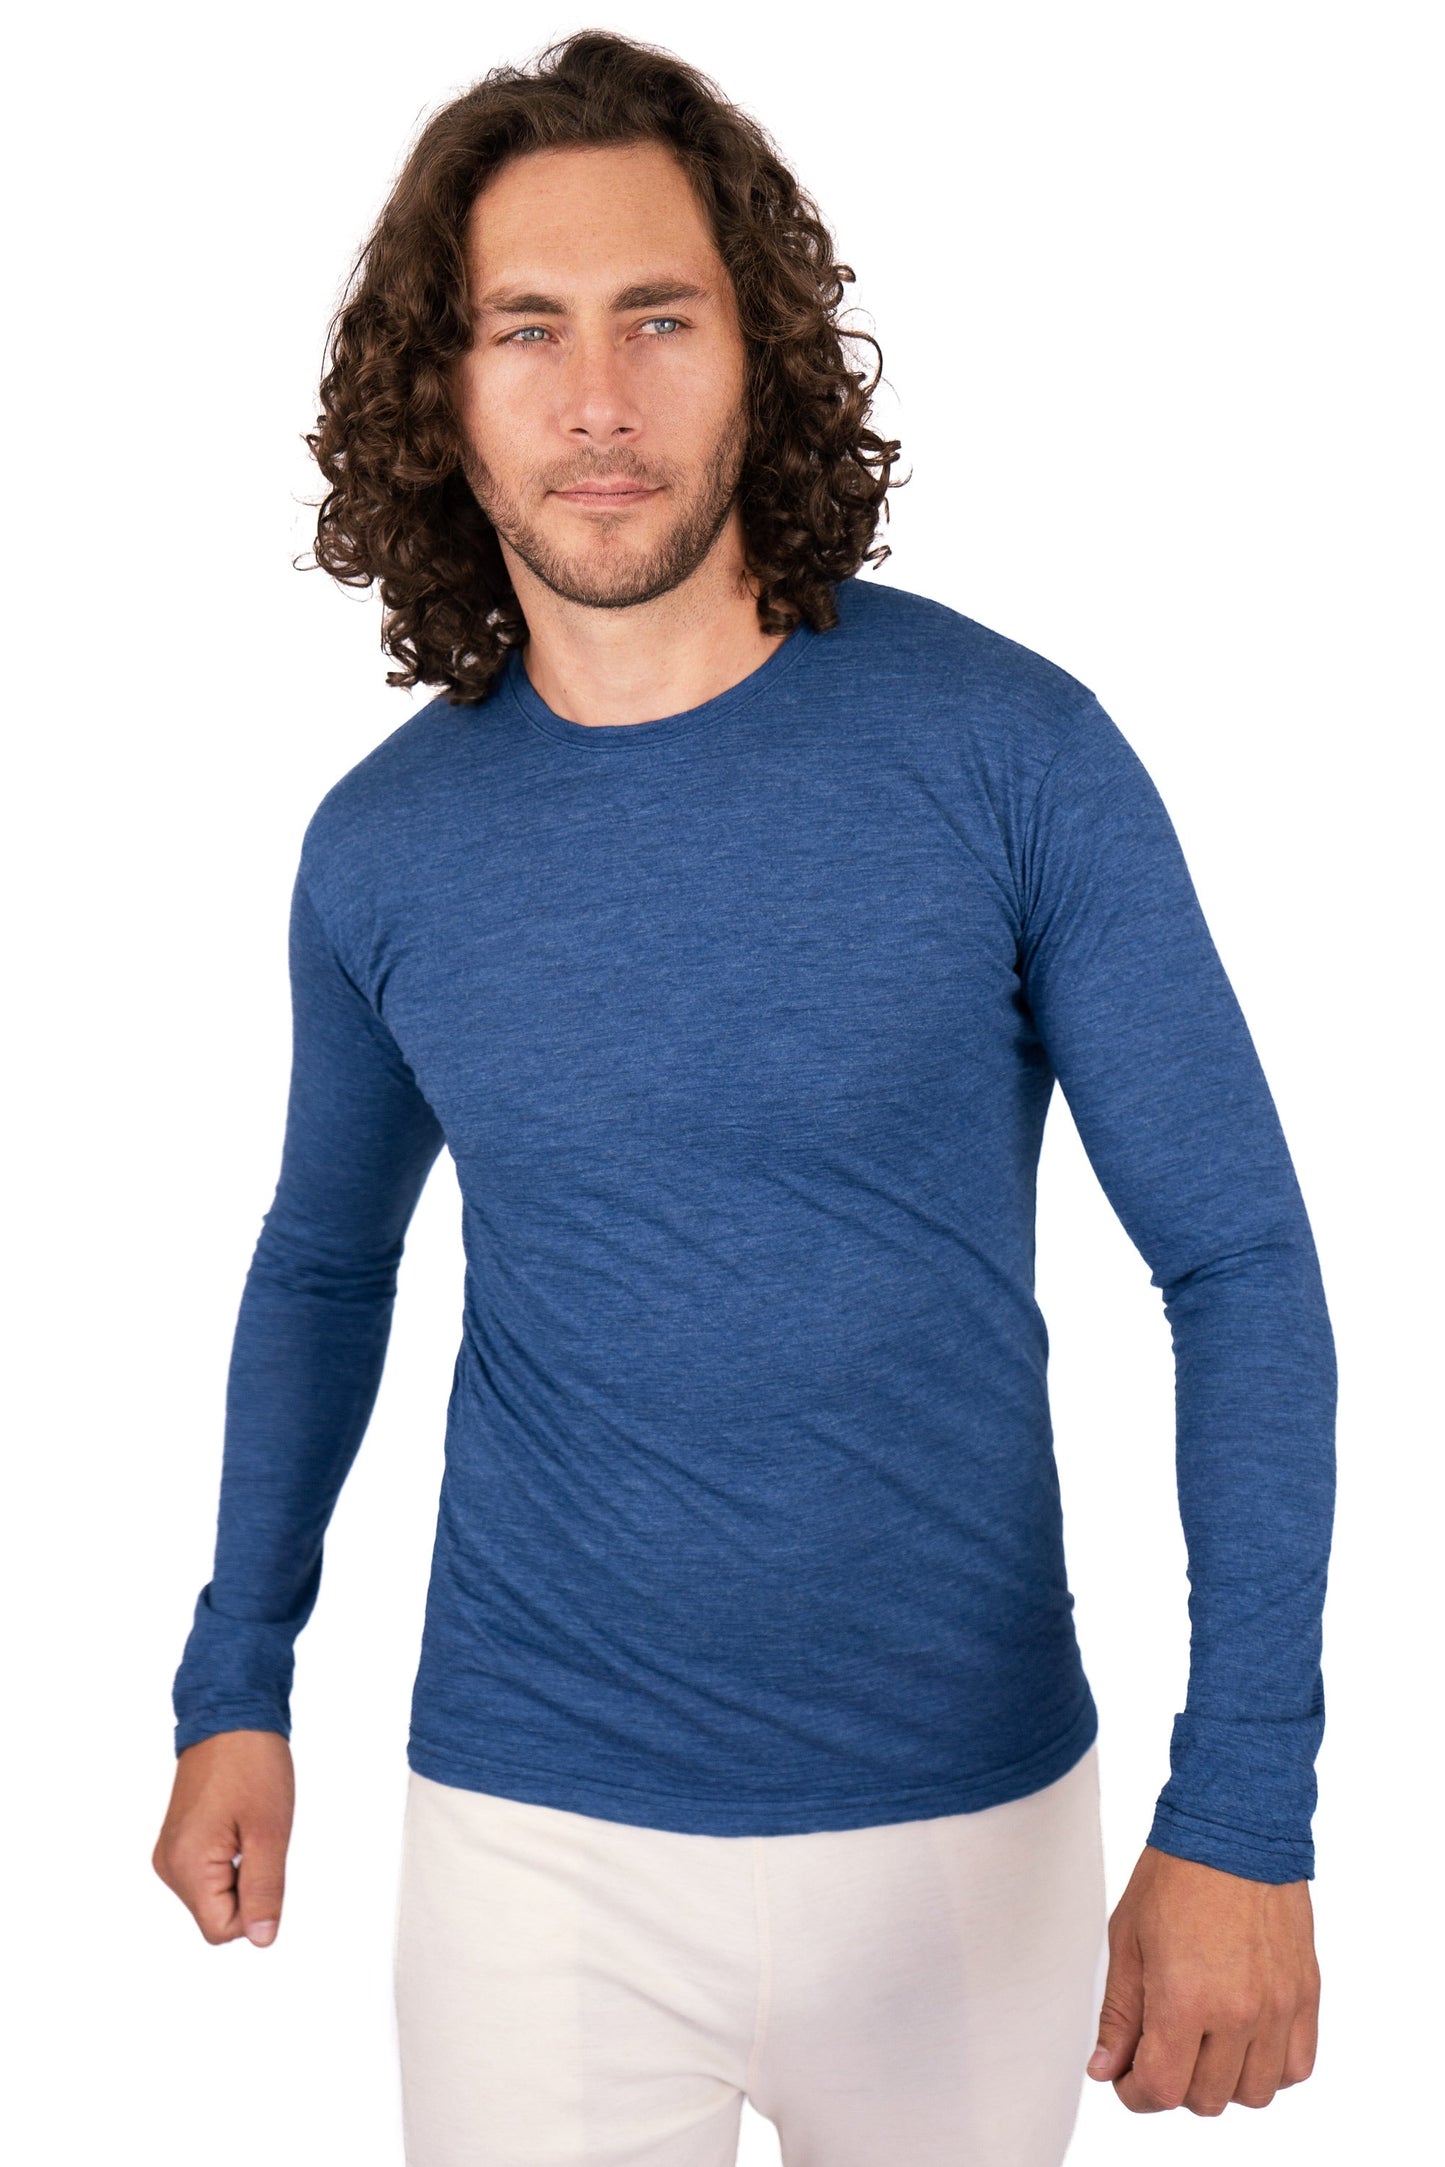 Men's Alpaca Wool Long Sleeve Base Layer: 110 Ultralight color Natural Blue